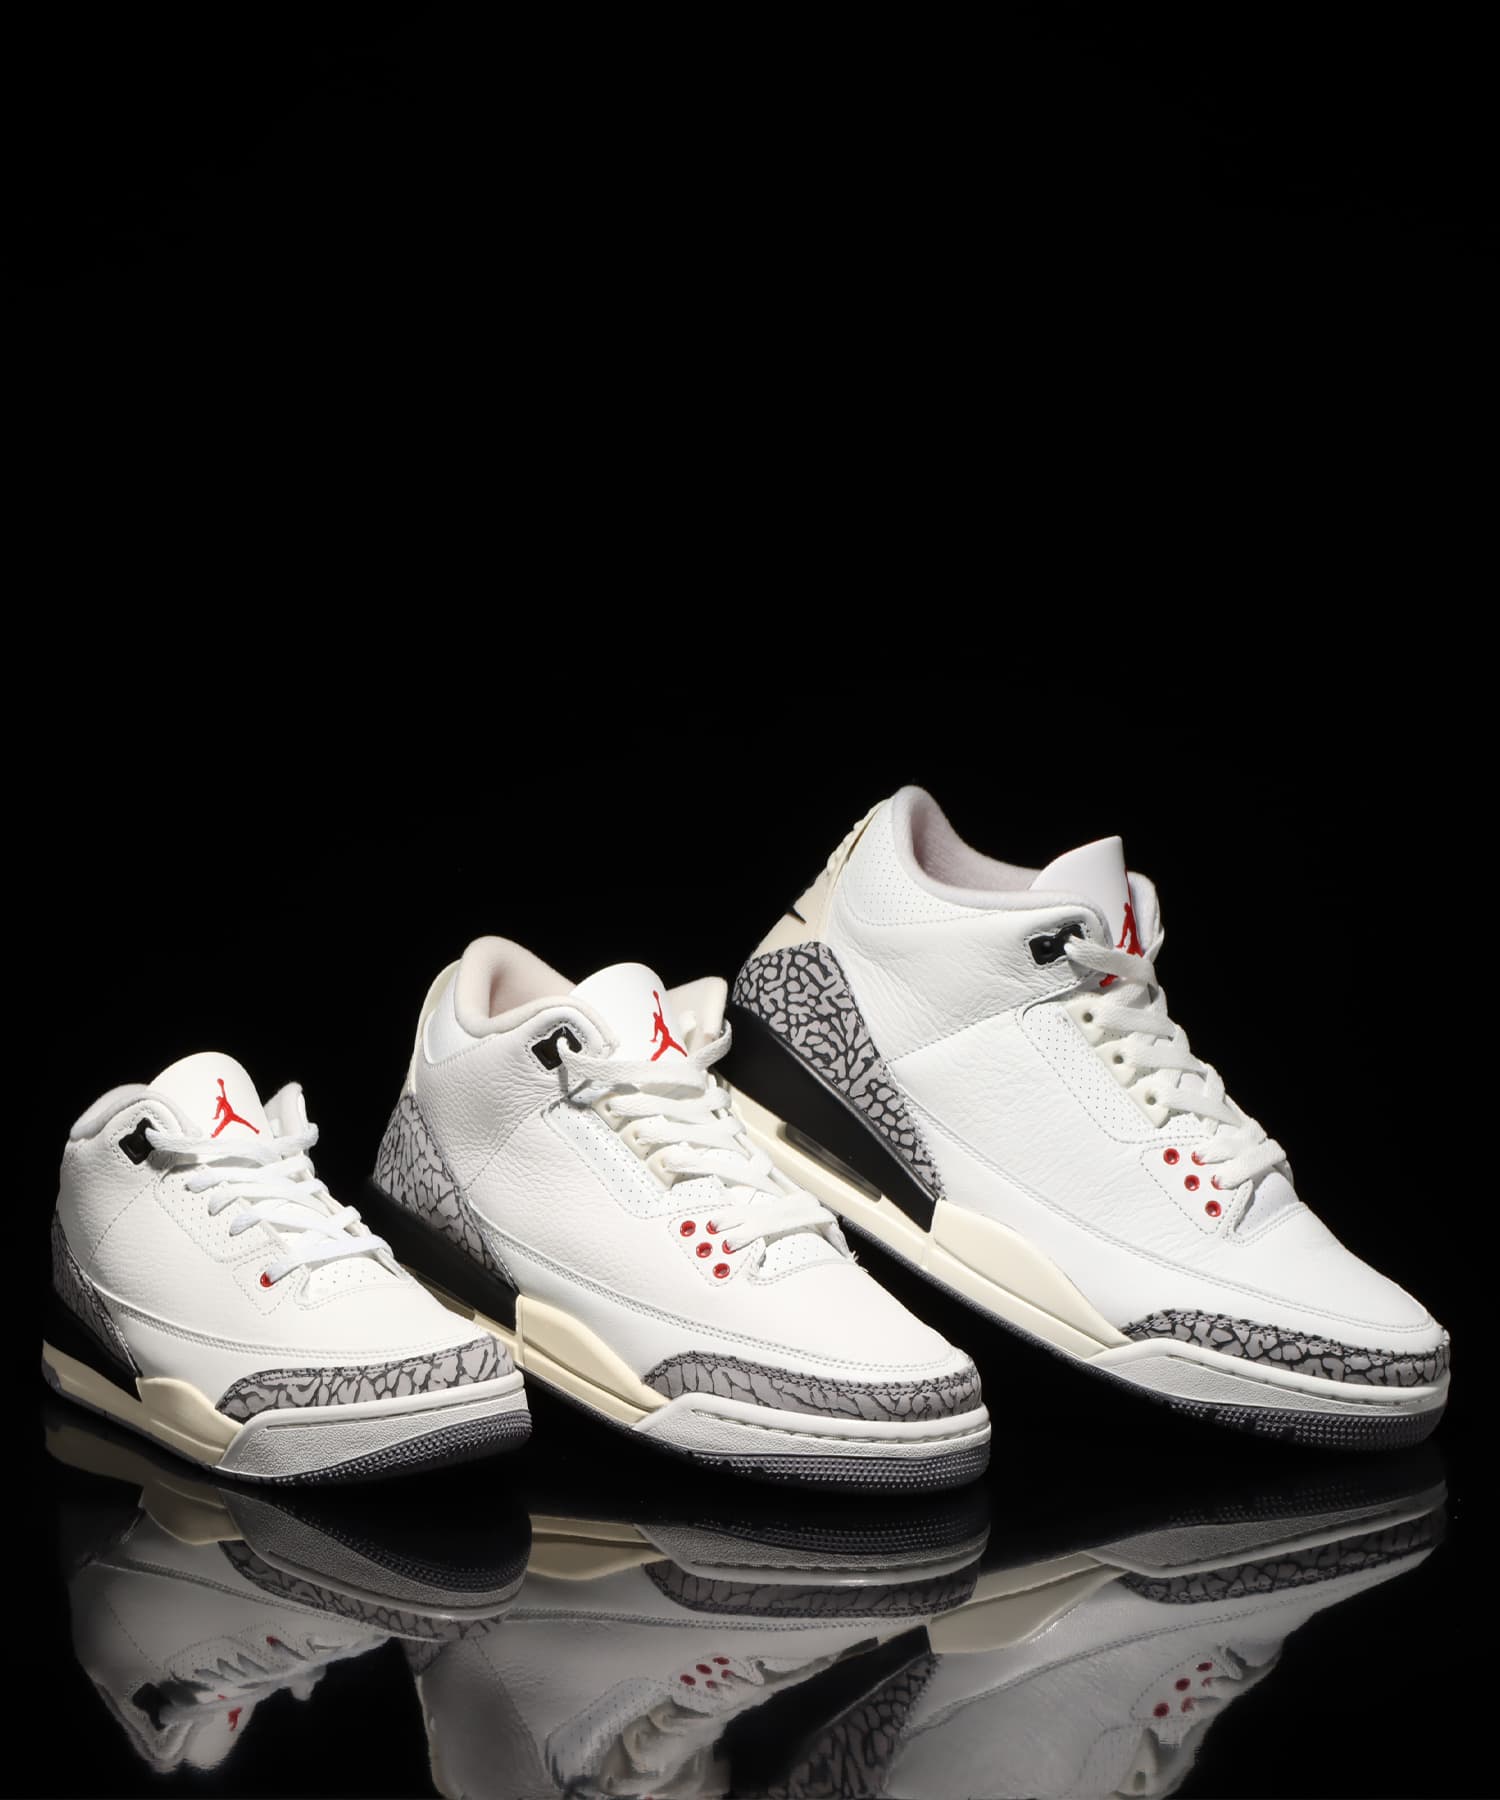 Jordan 3 GS White Cement Reimagined